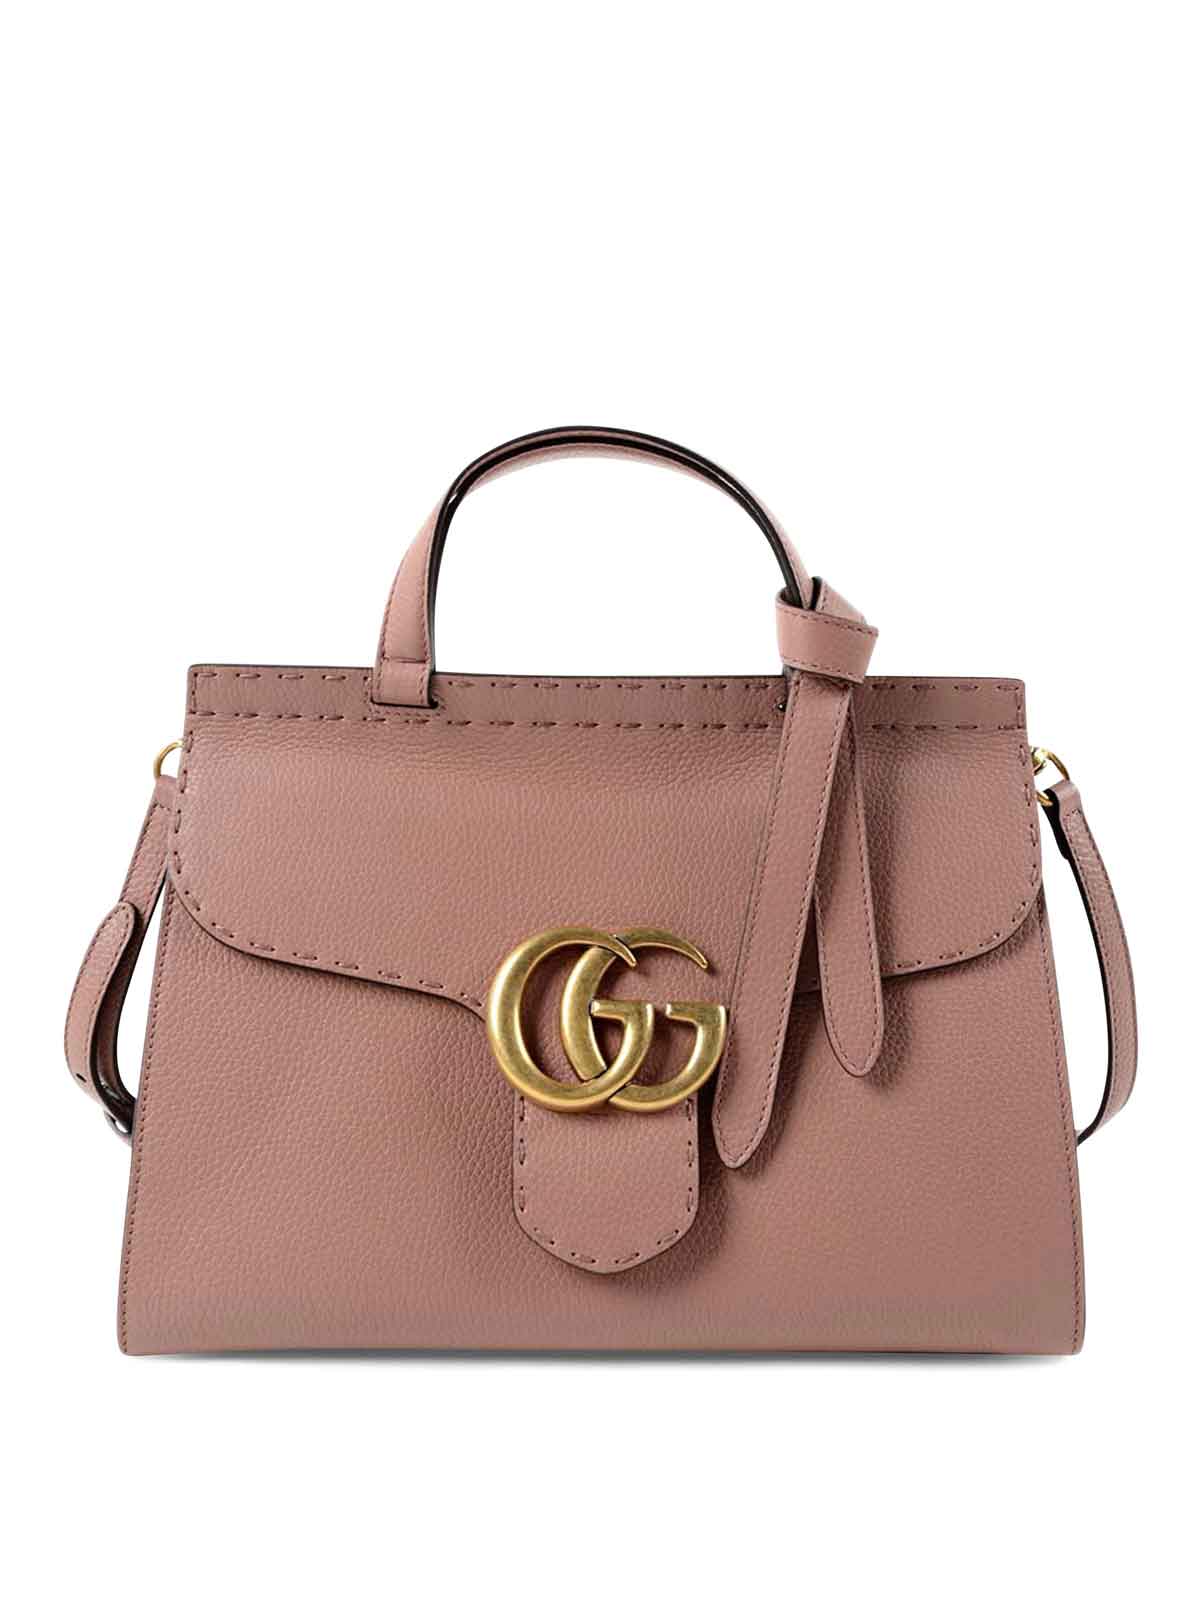 Gucci - GG Marmont Cellarius bag 